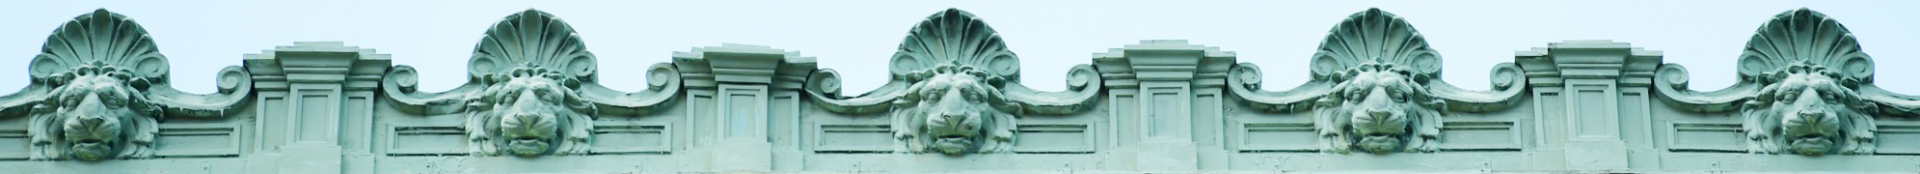 Columbia University campus architecture featuring lion head mascot. 